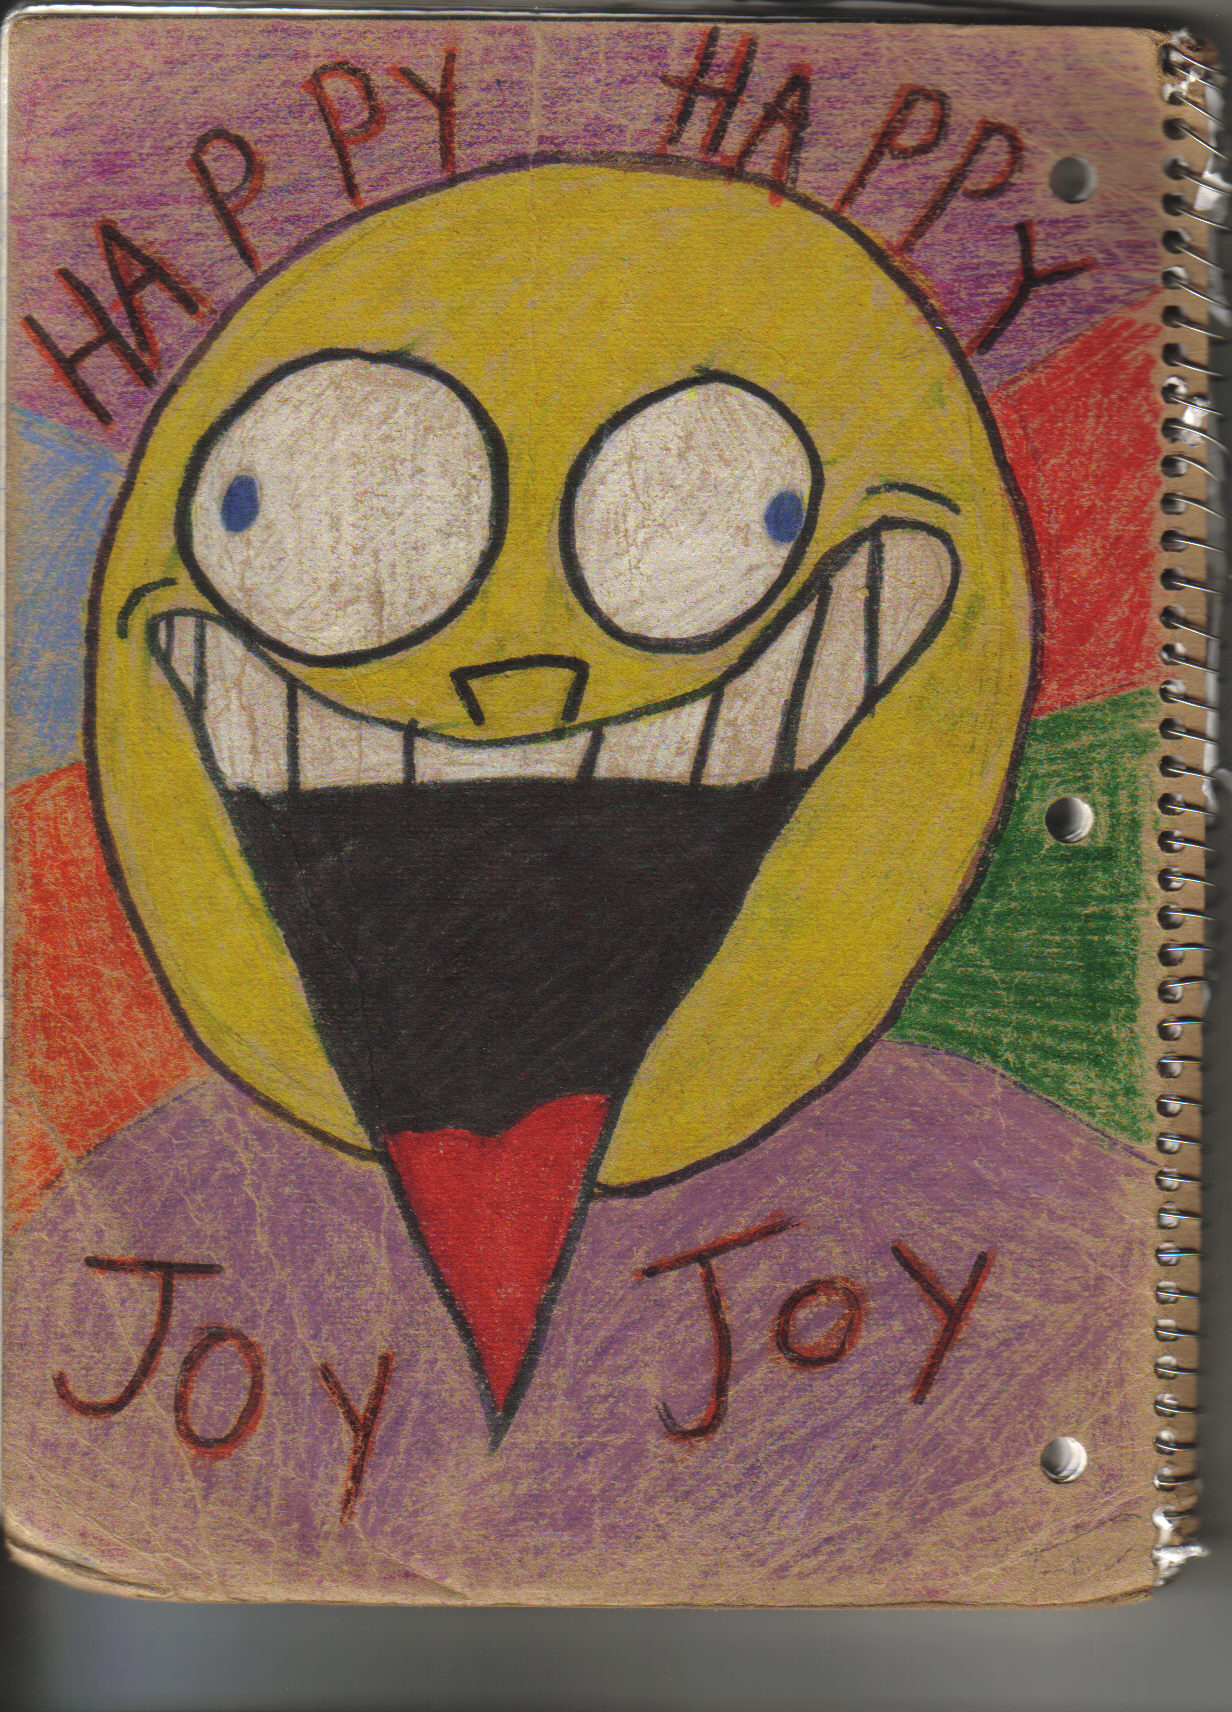 Happy happy joy joy by Hobz_the_destroyer